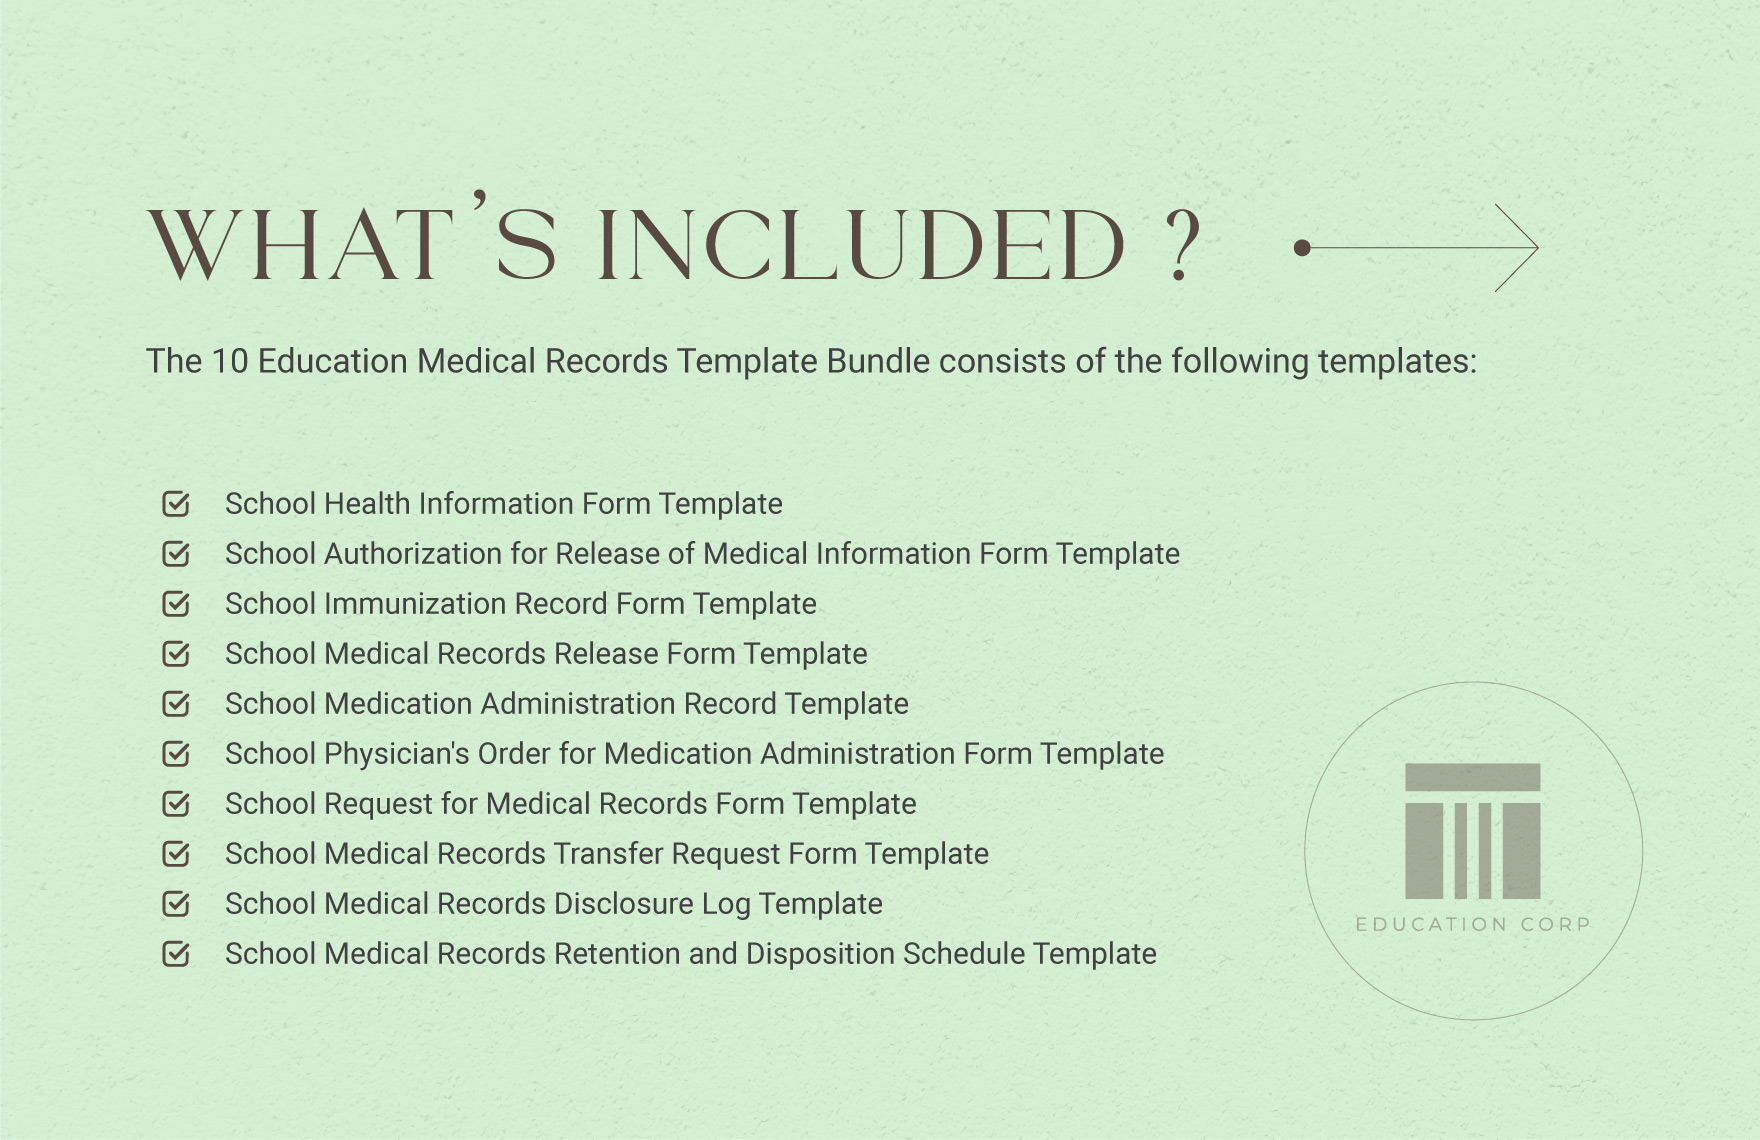 10 Education Medical Records Template Bundle